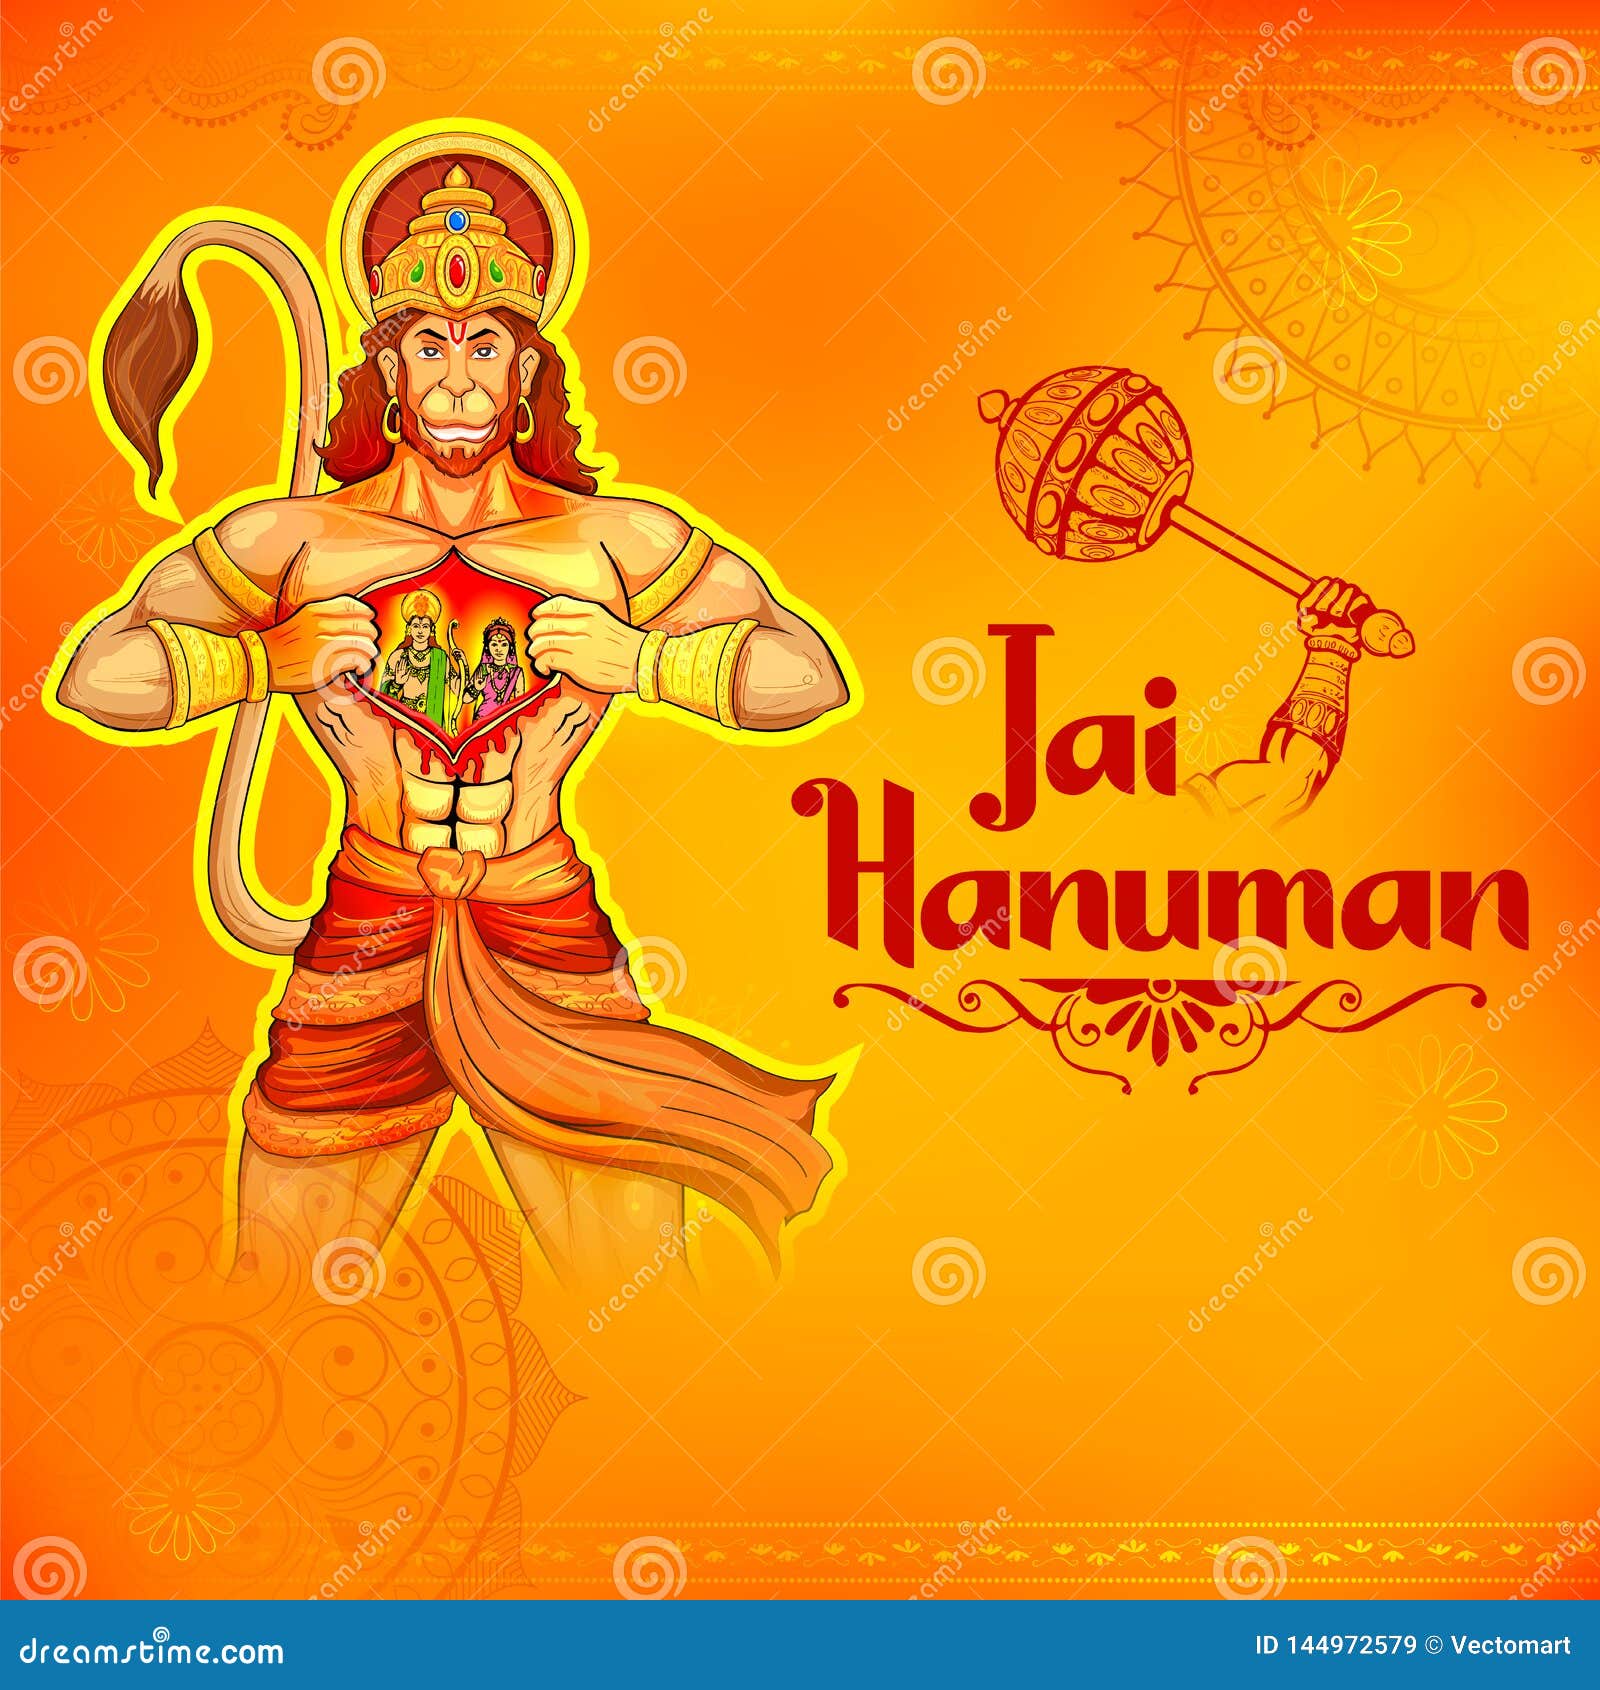 Lord Hanuman on Abstract Background for Hanuman Jayanti Festival of India  Stock Vector - Illustration of hinduism, faith: 144972579